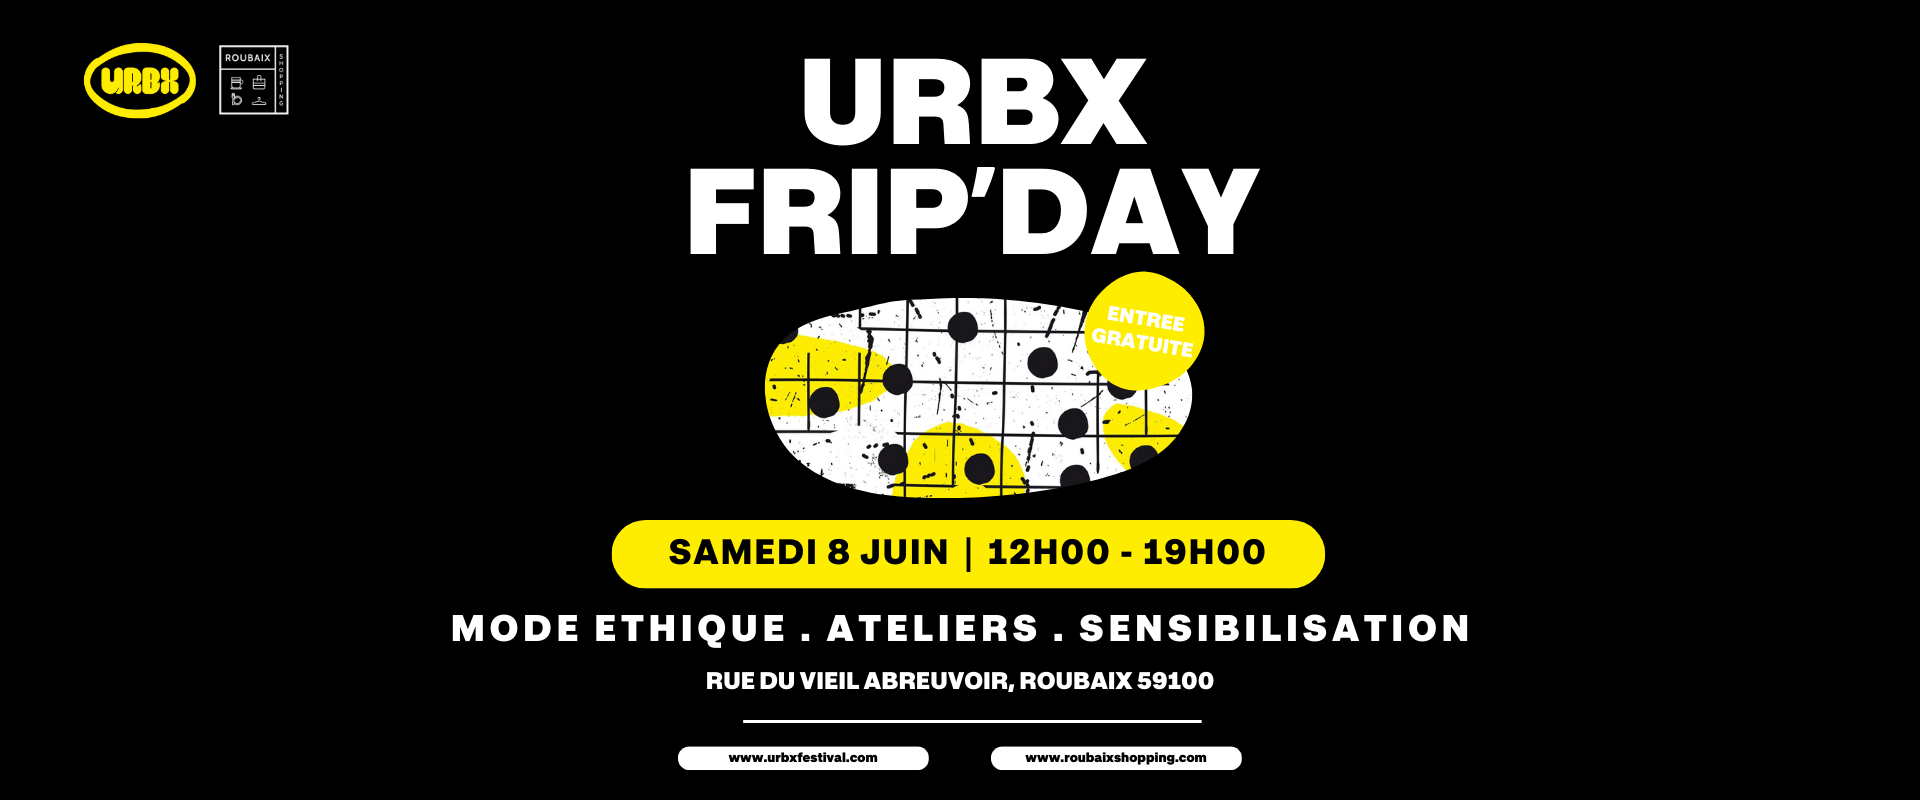 URBX FRIP DAY